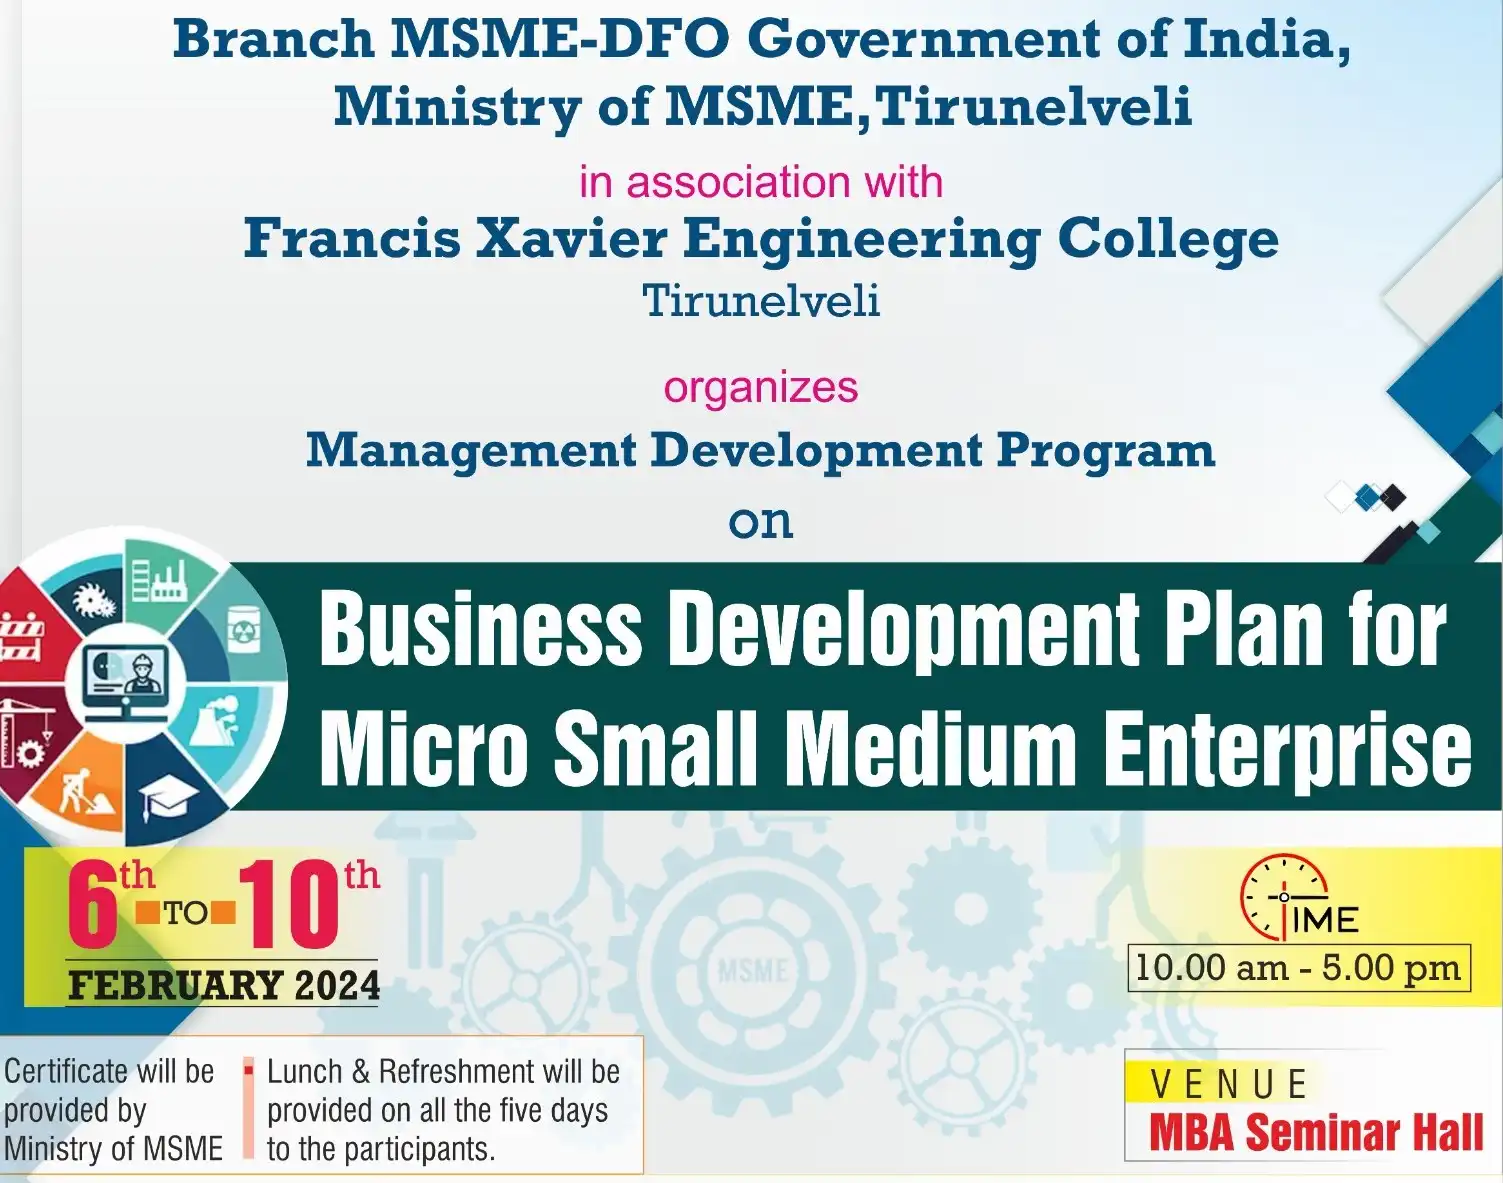  Management Development Program on Business Development Plan for Micro Small Medium Enterprise 